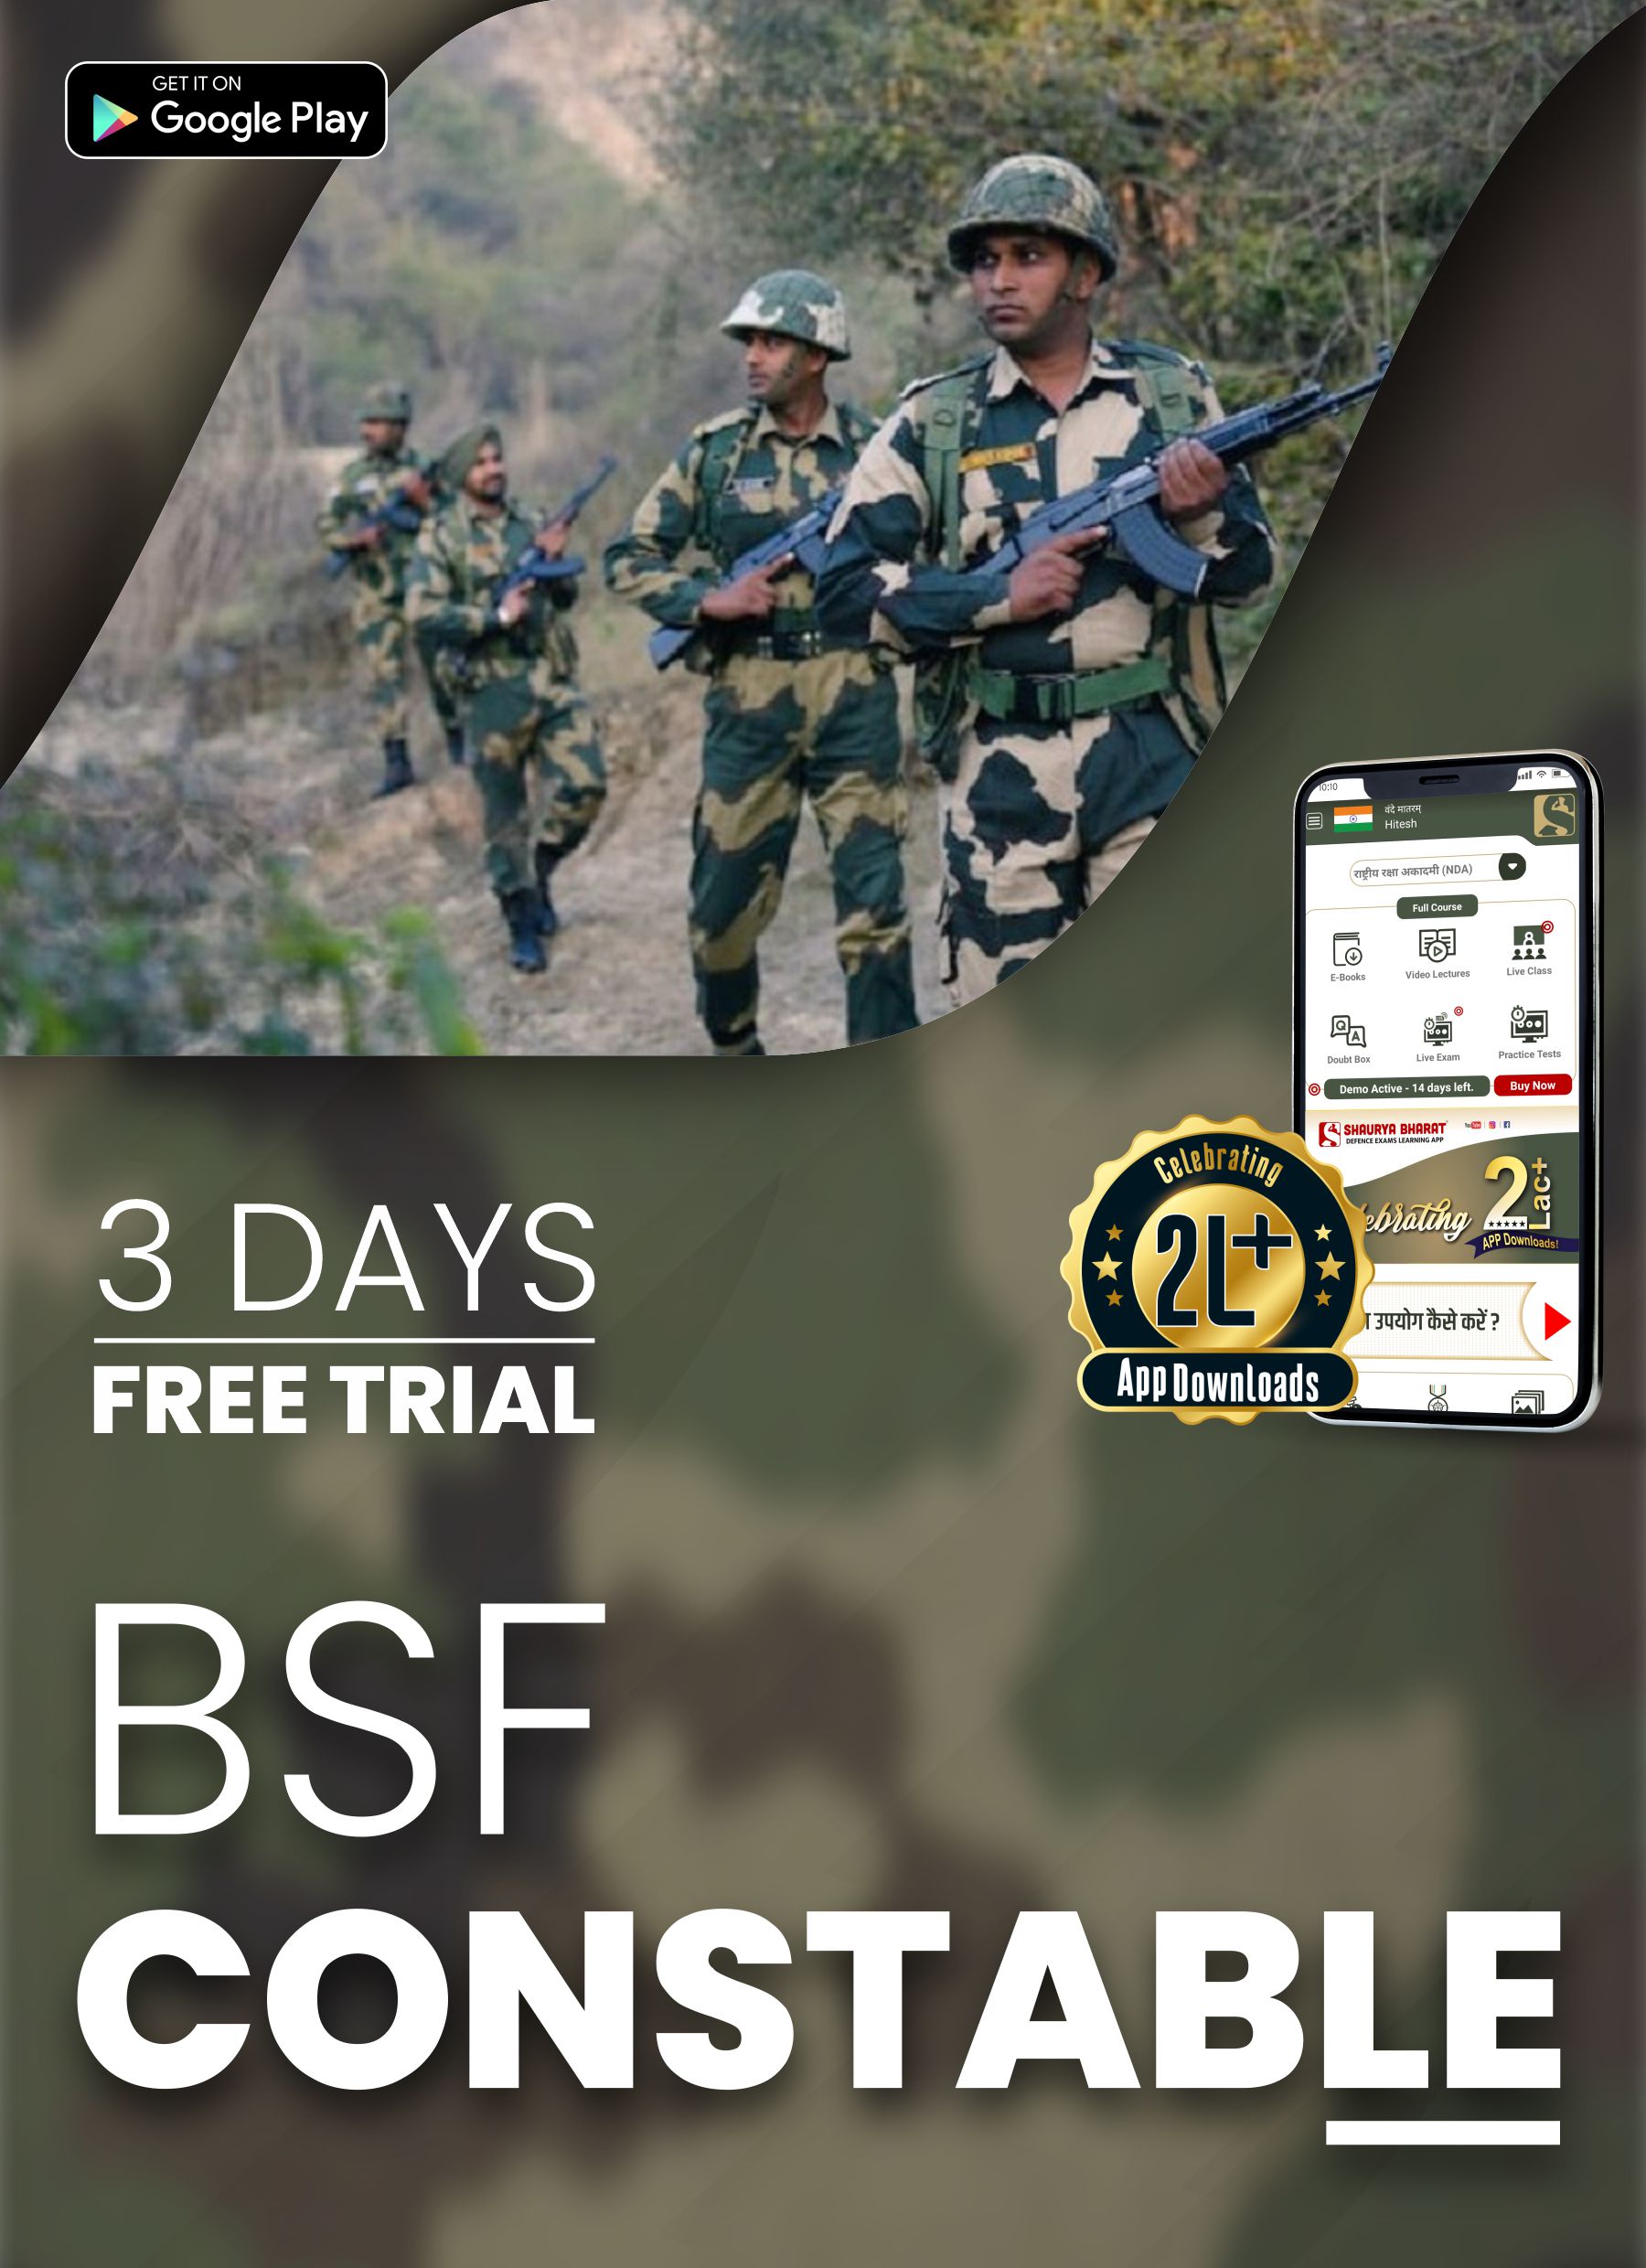 BSF Open Rally Bharti Preparation Tips- Written Exam